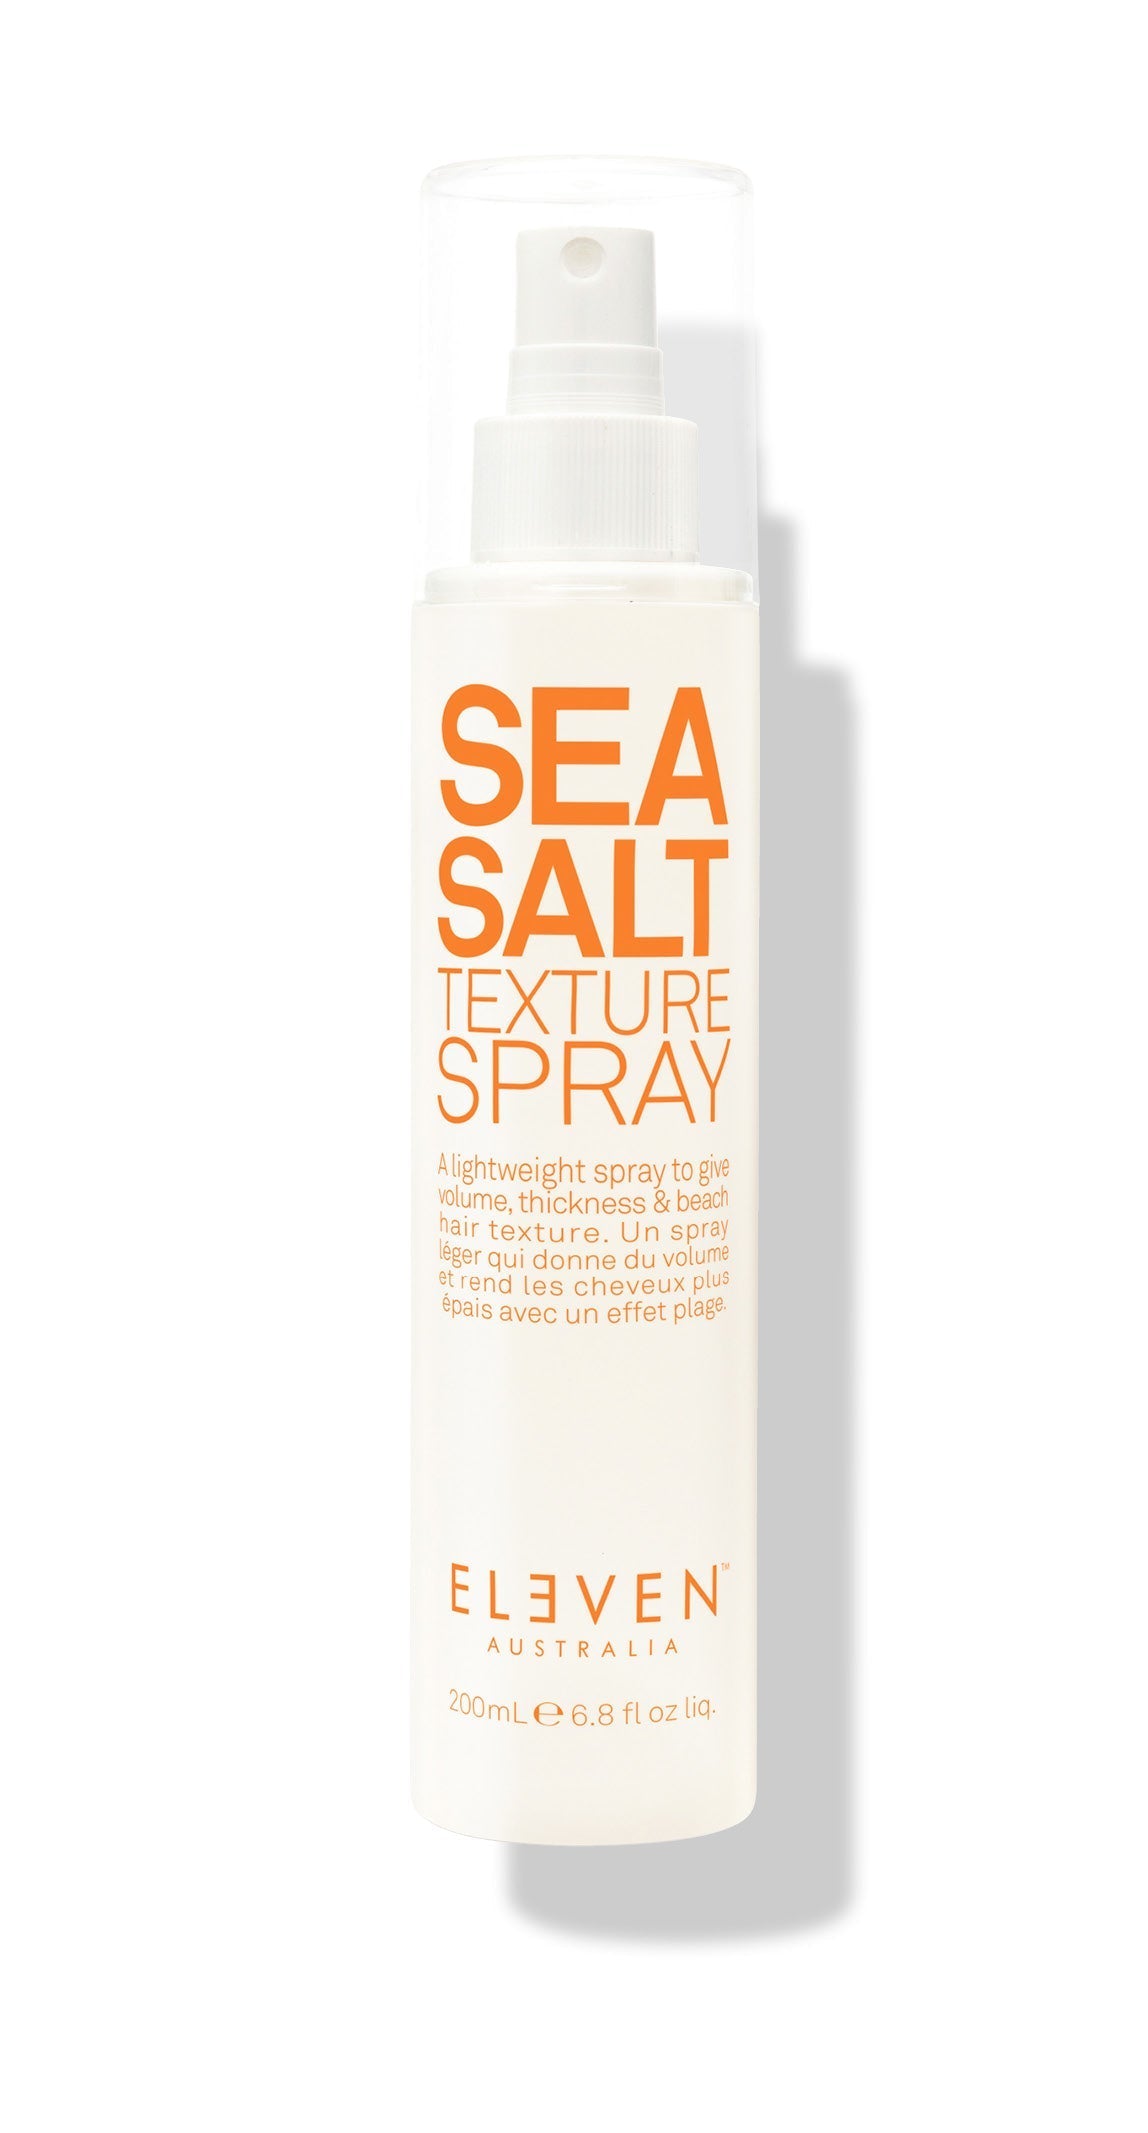 Sea Salt Texture Spray - 200ml - ELEVEN Australia